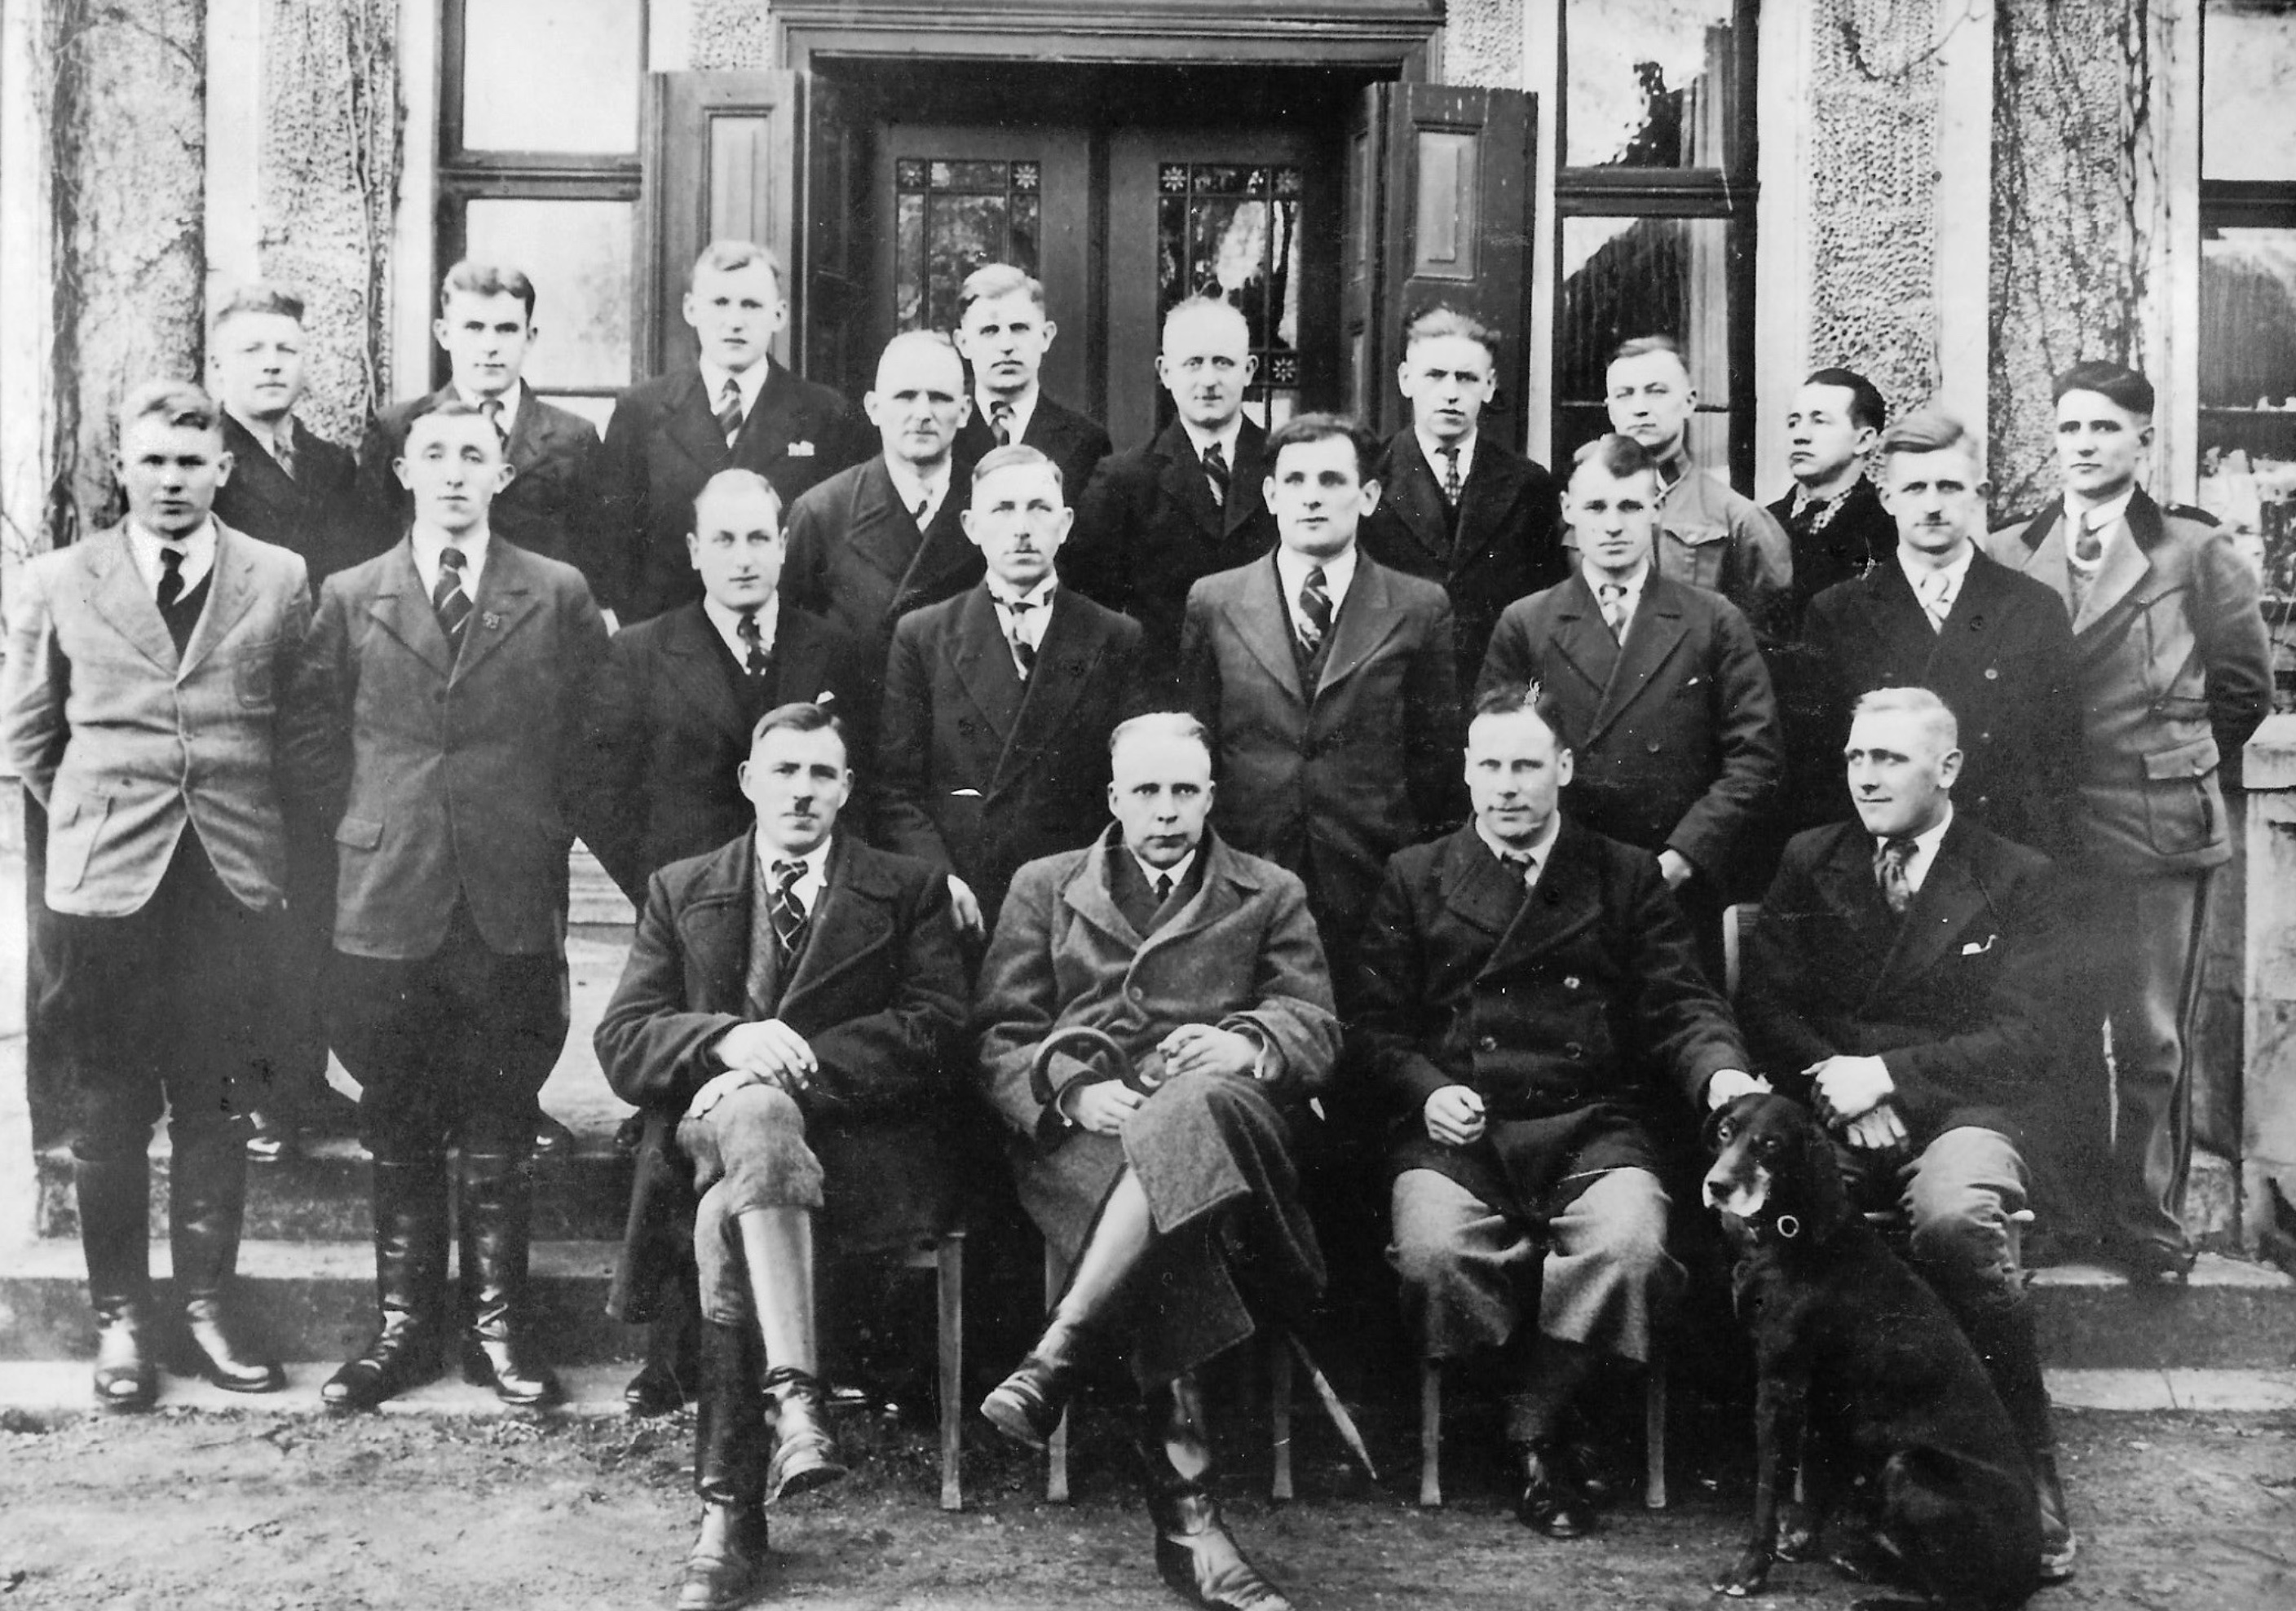 Teilnehmer des Meisterlehrgangs 1937 in der Melkerschule Schlatkow